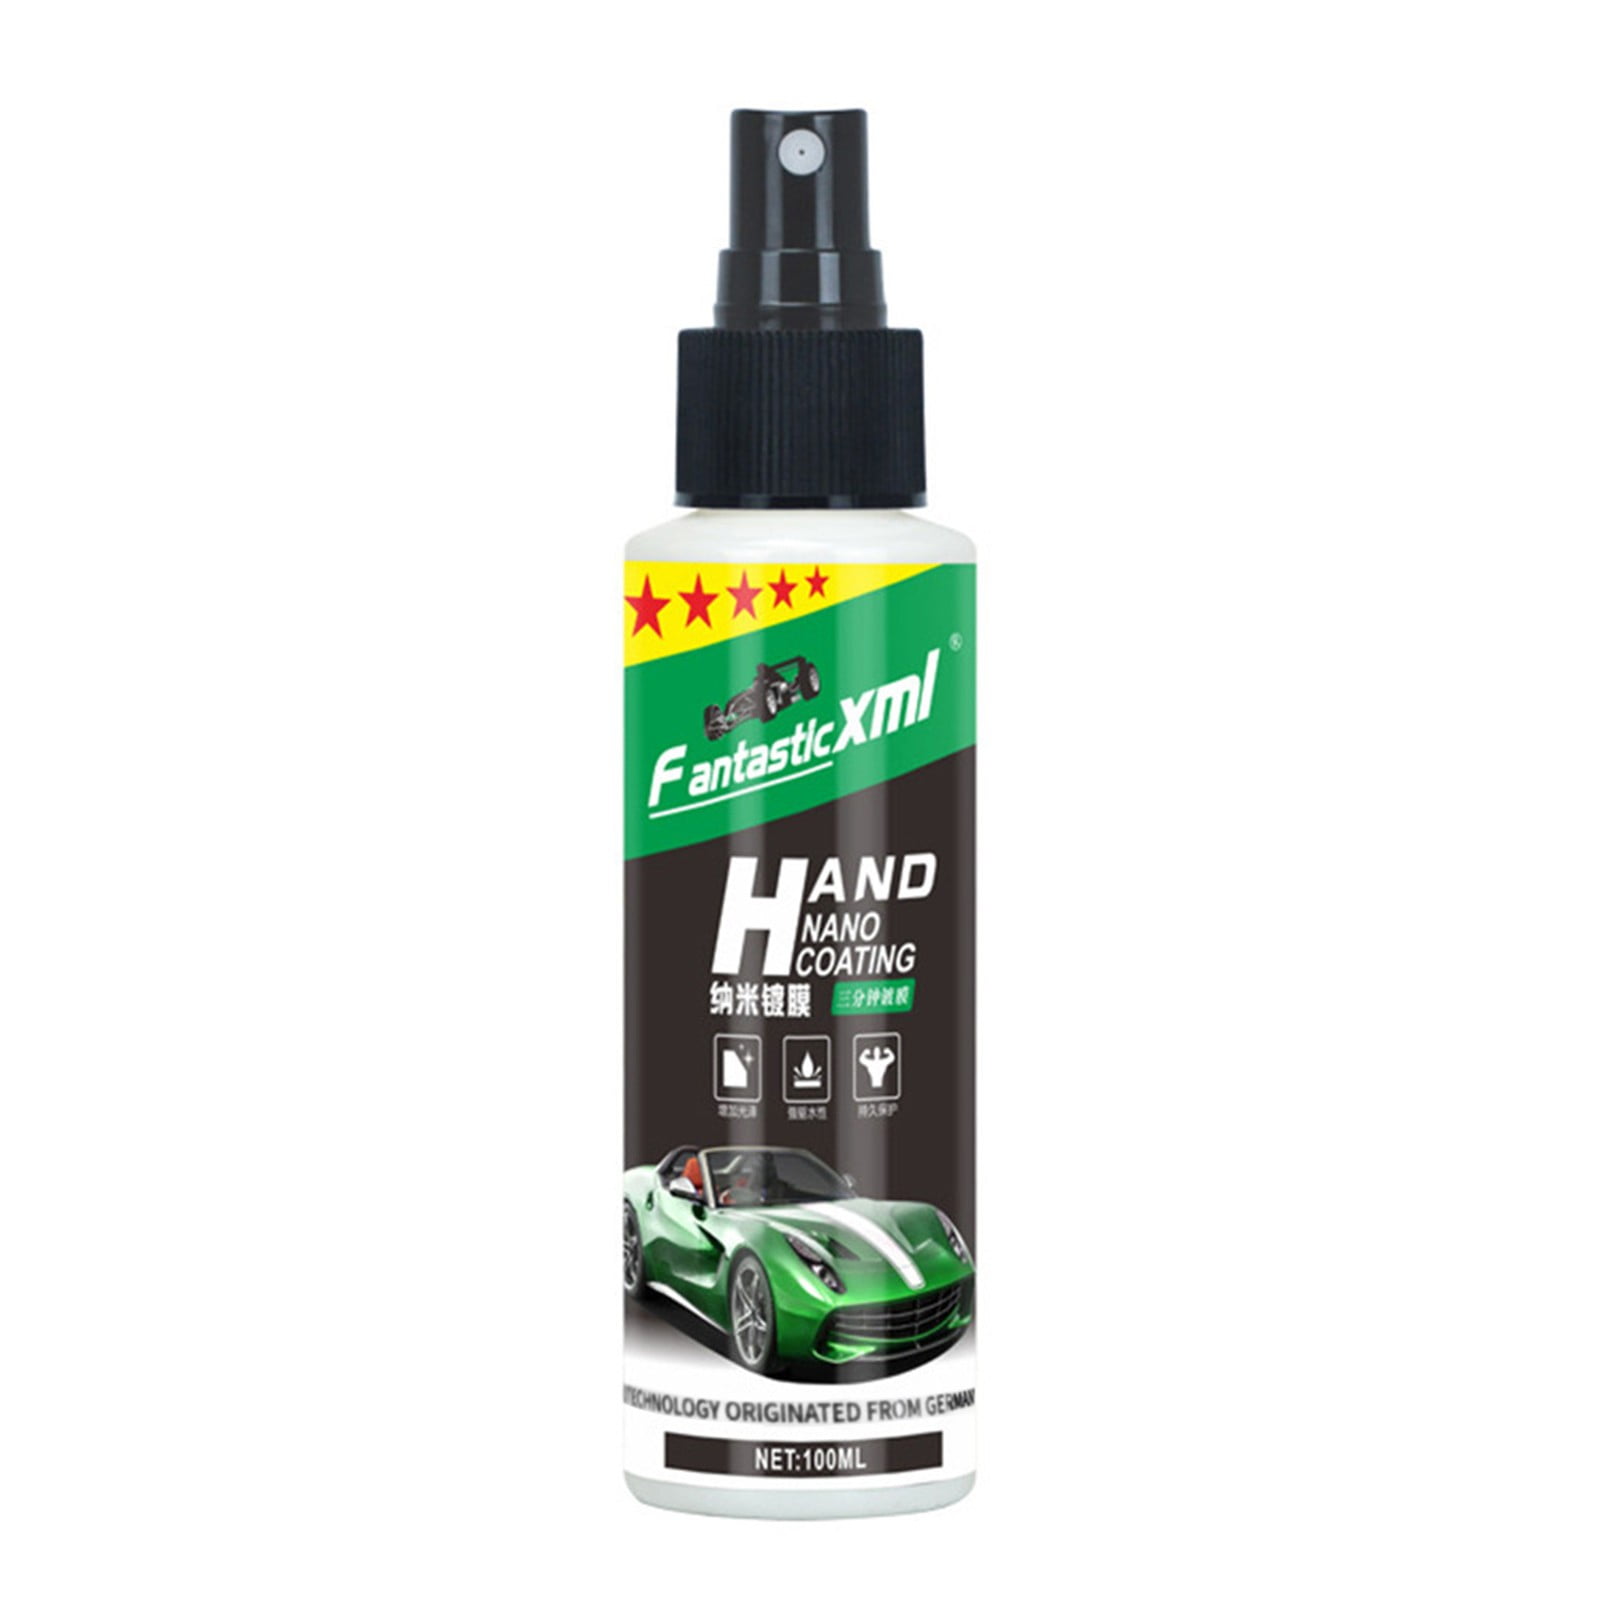 TopCoat F11 Polish & Sealer Kit with Full-Size Spray, Travel